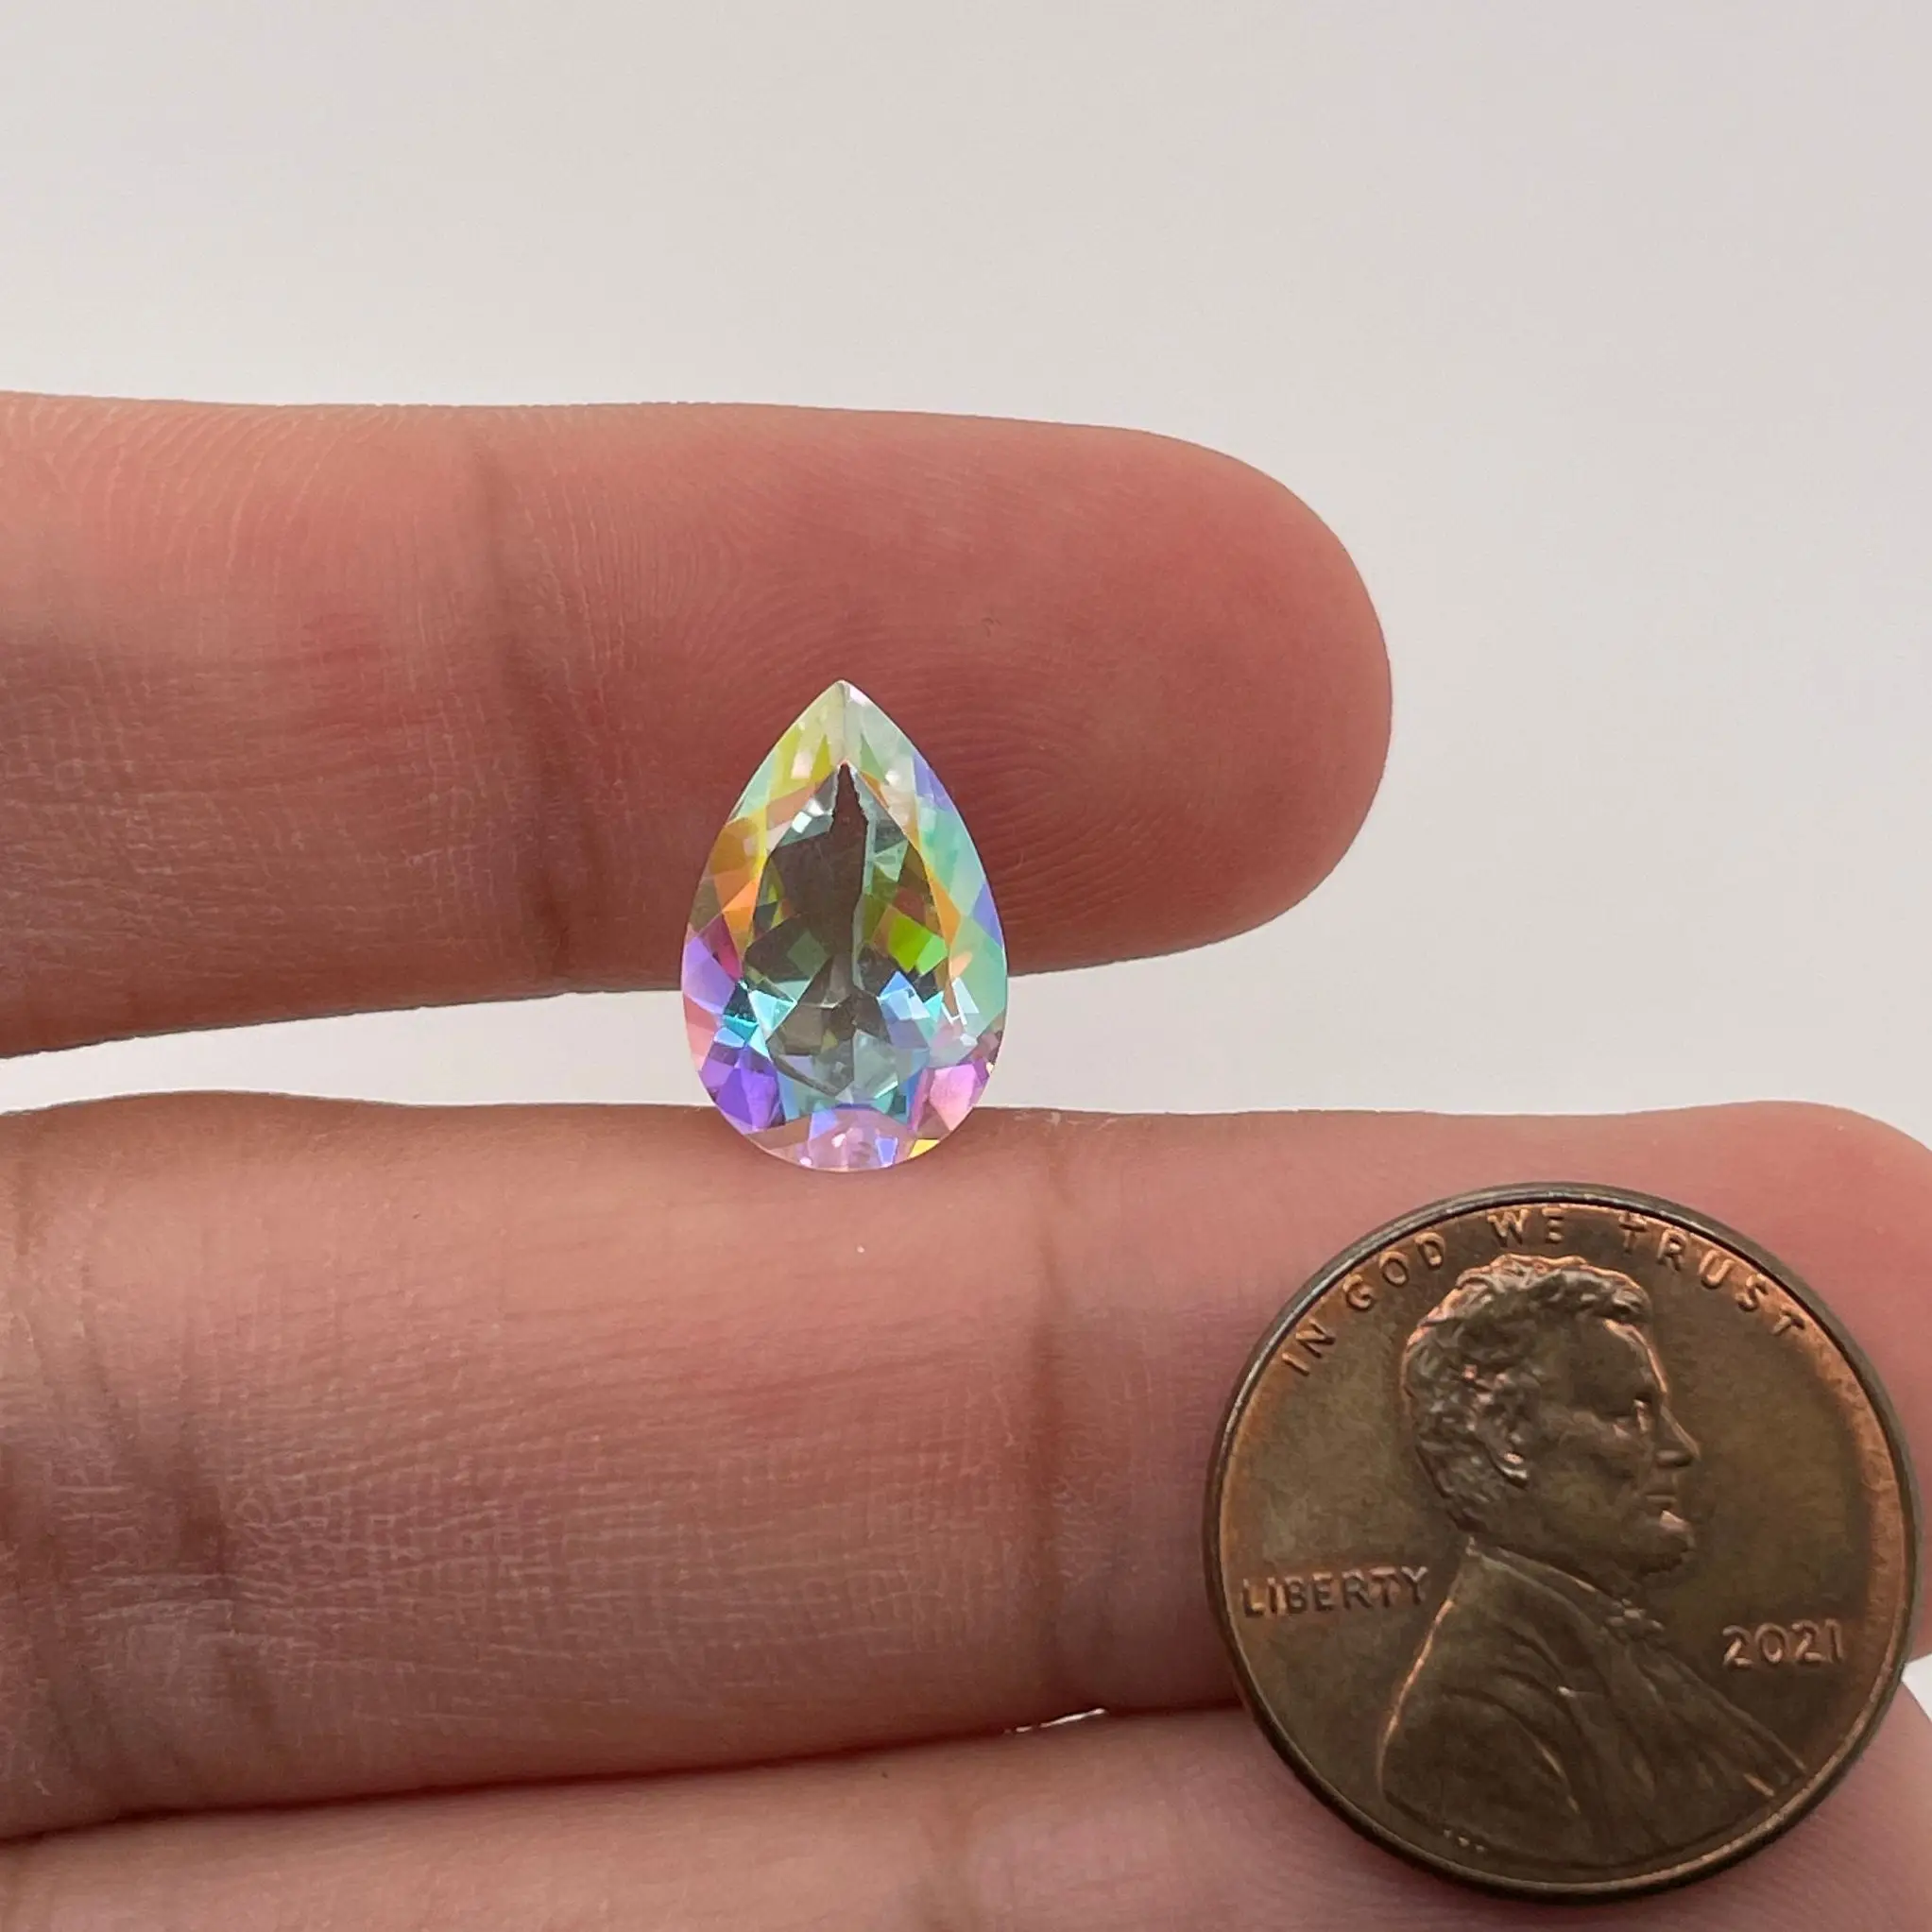 12 or 60 Pieces: 6x8 mm Teardrop Imitation Crystal Birthstone Bead